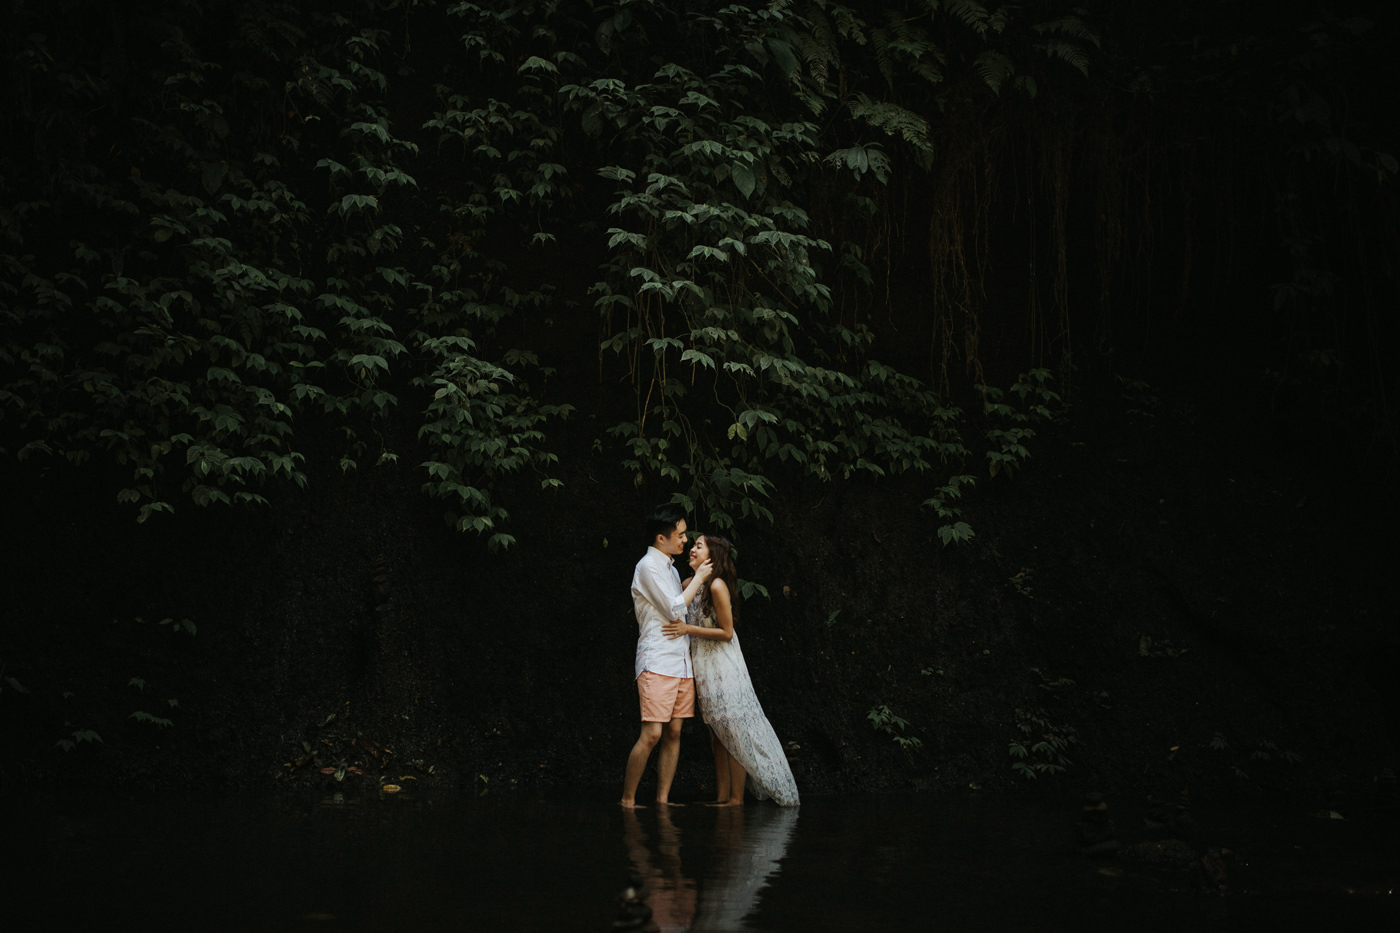 best of dicky iluminen bali wedding photographer destination photography indonesia prewedding intimate connection session